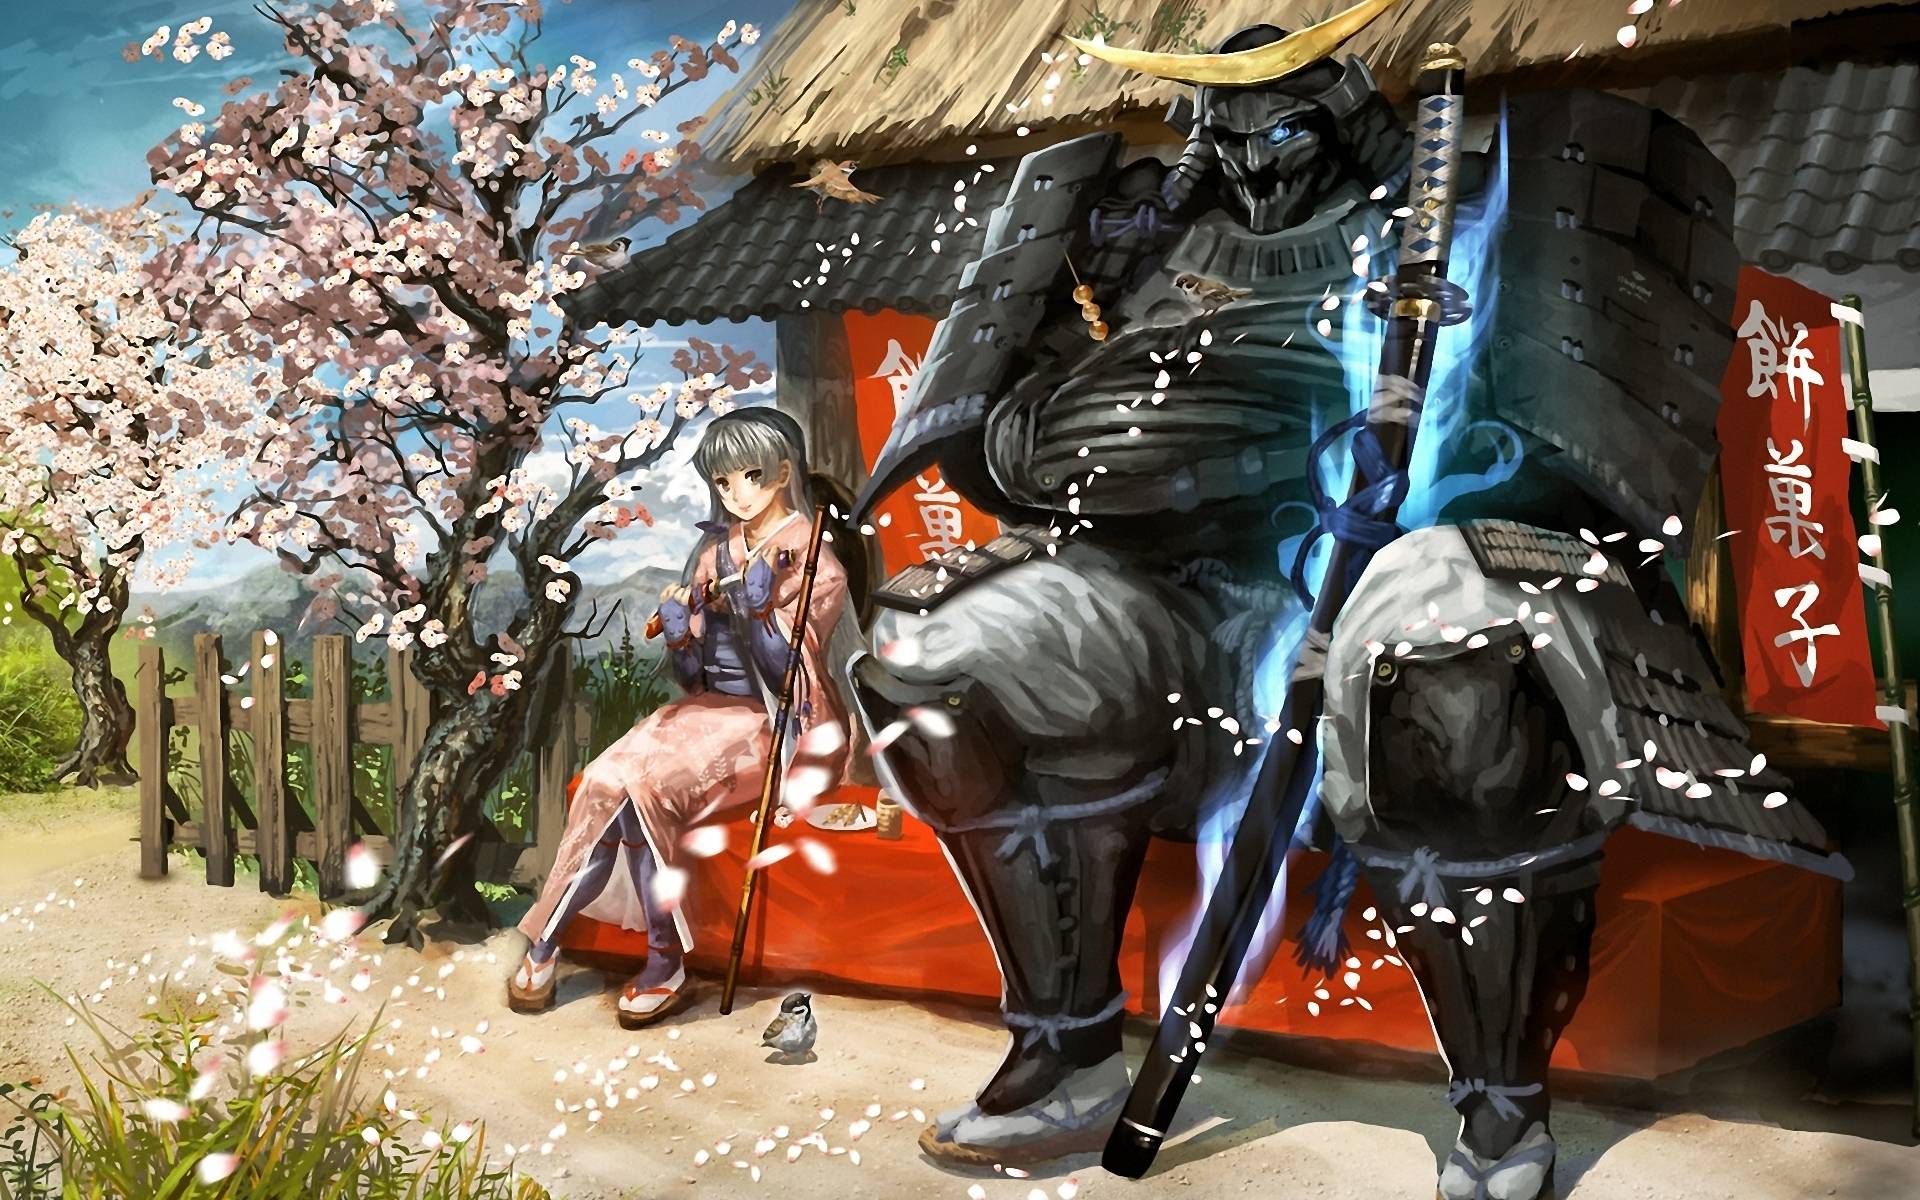 Anime Samurai Wallpaper Free Anime Samurai Background